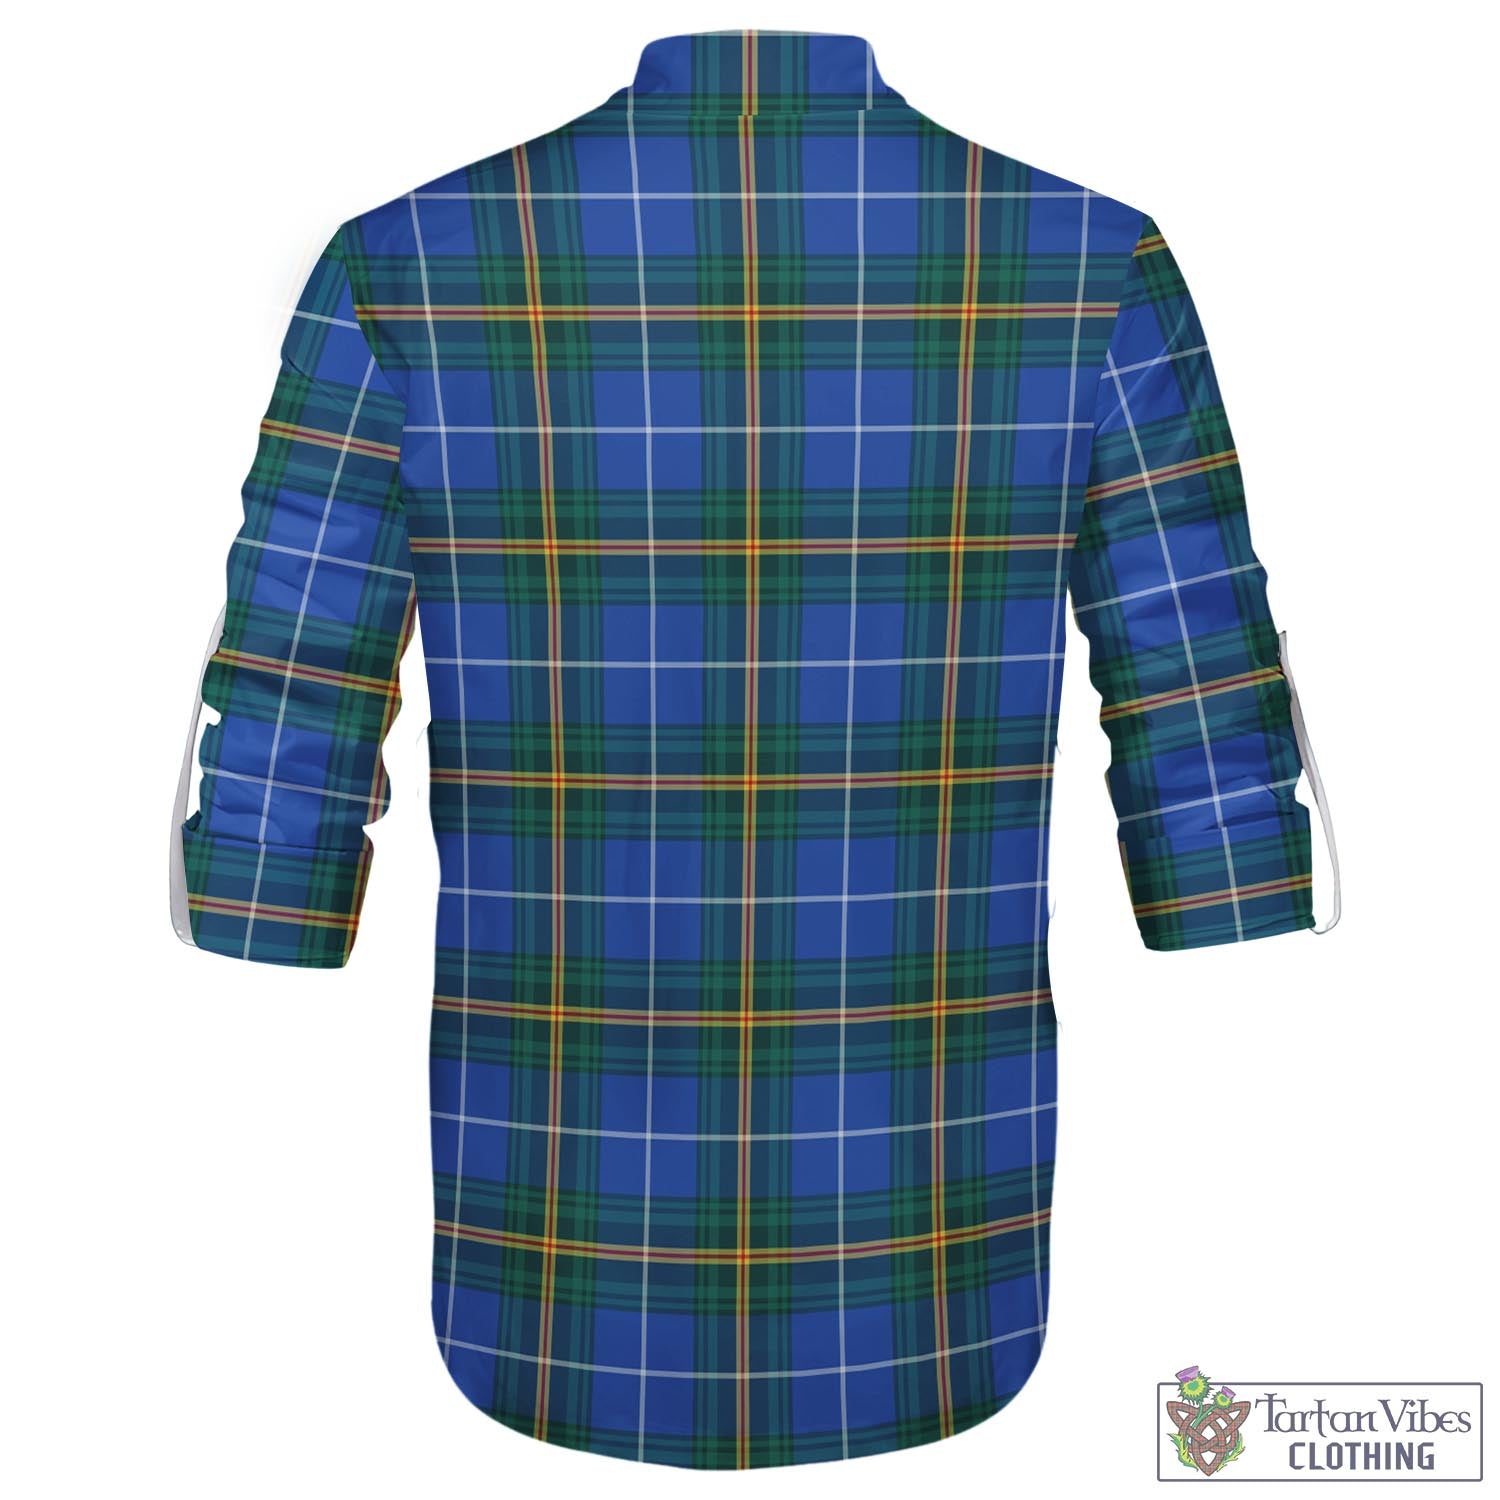 Tartan Vibes Clothing Nova Scotia Province Canada Tartan Men's Scottish Traditional Jacobite Ghillie Kilt Shirt